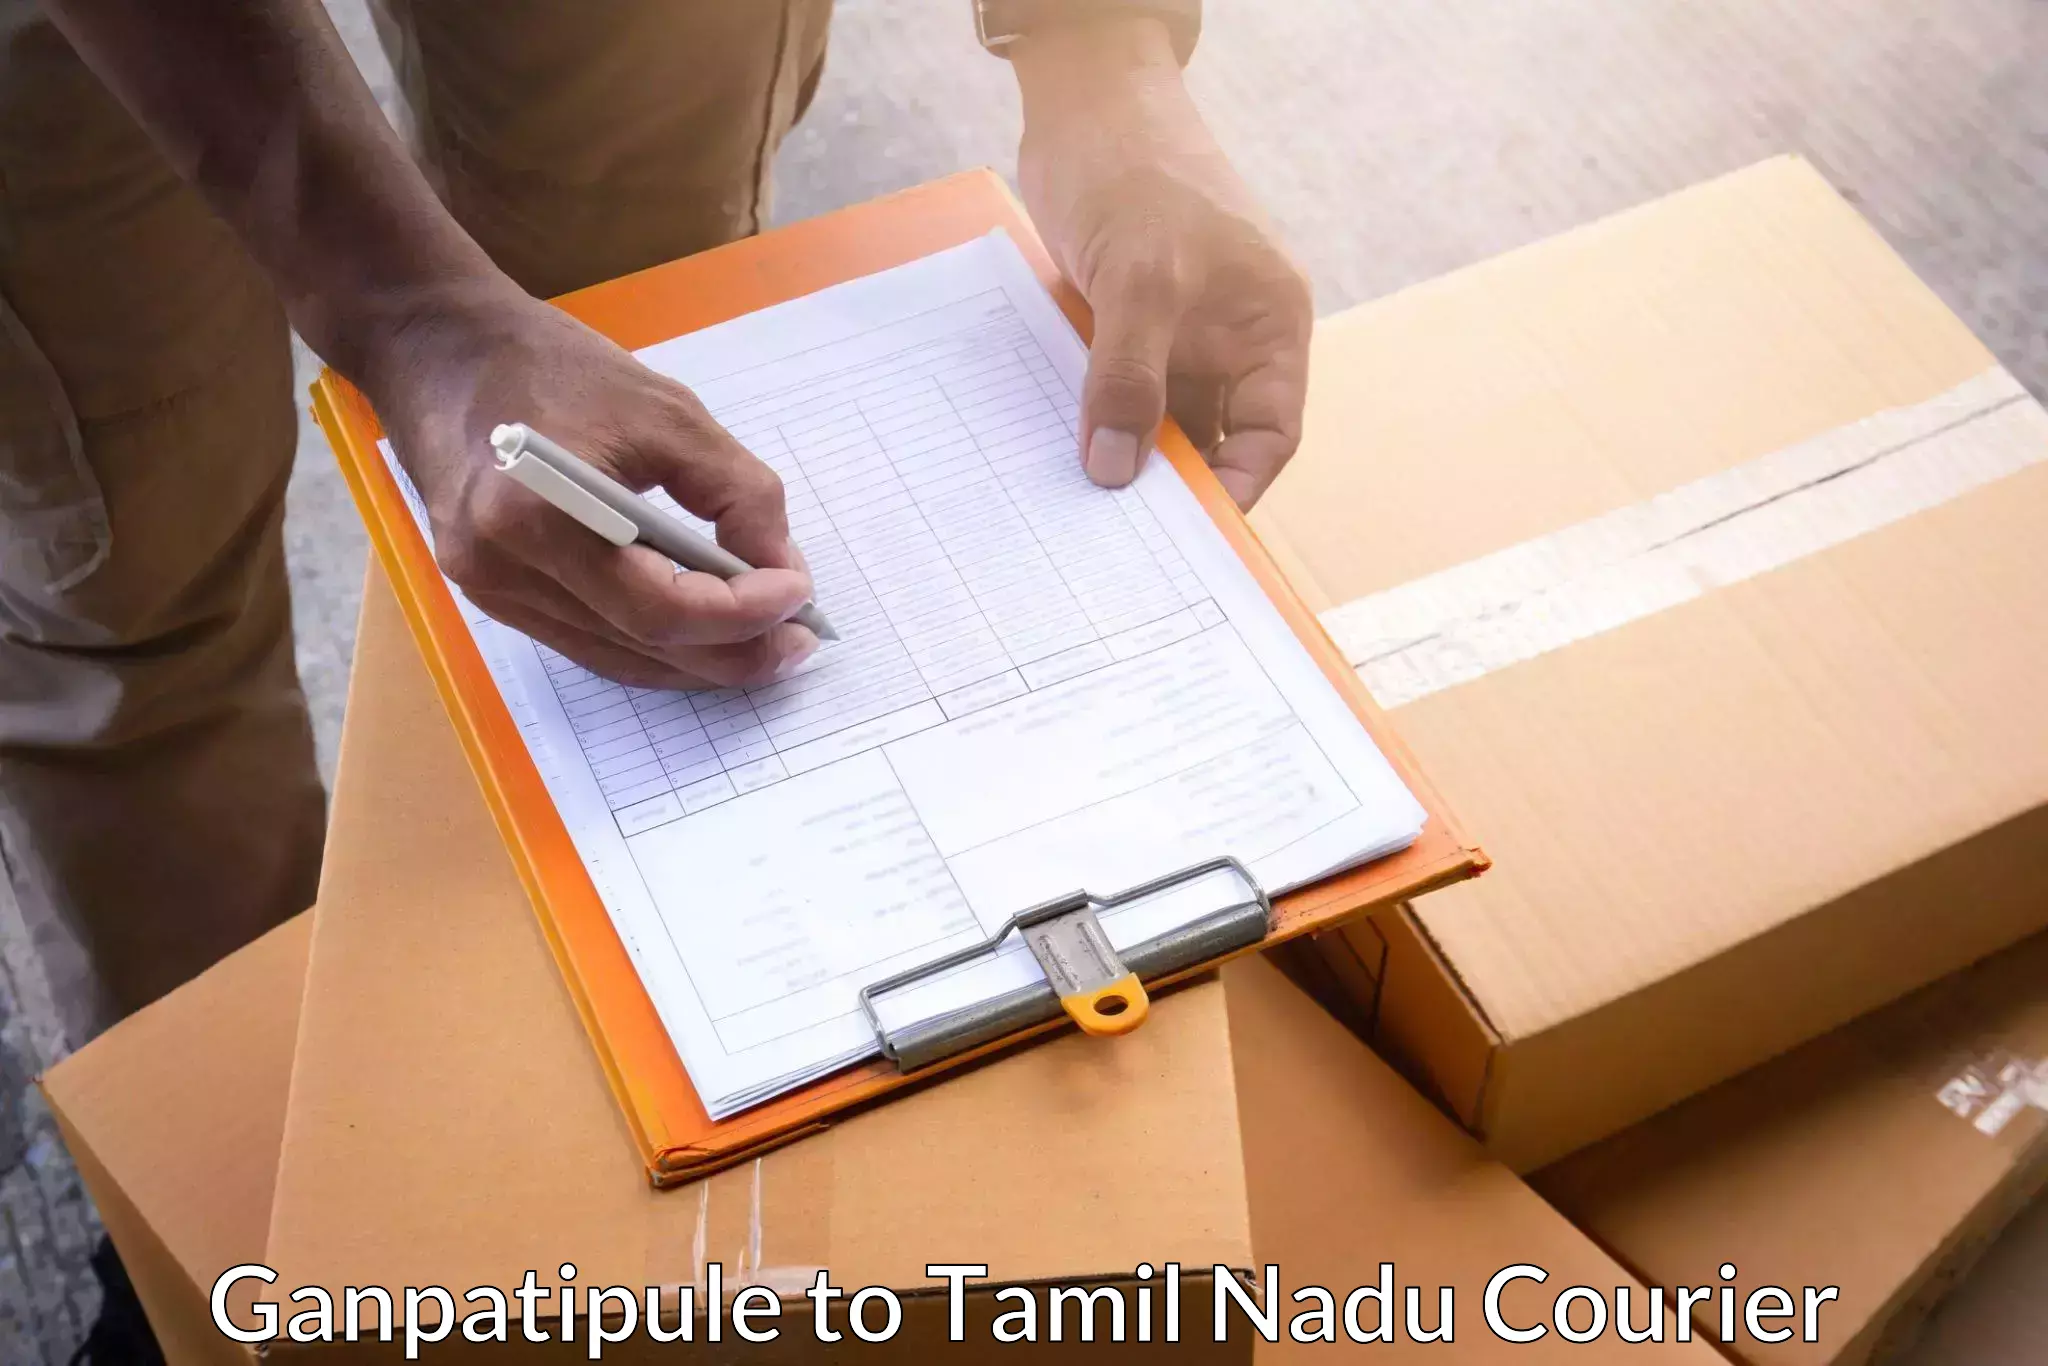 On-call courier service Ganpatipule to Tamil Nadu